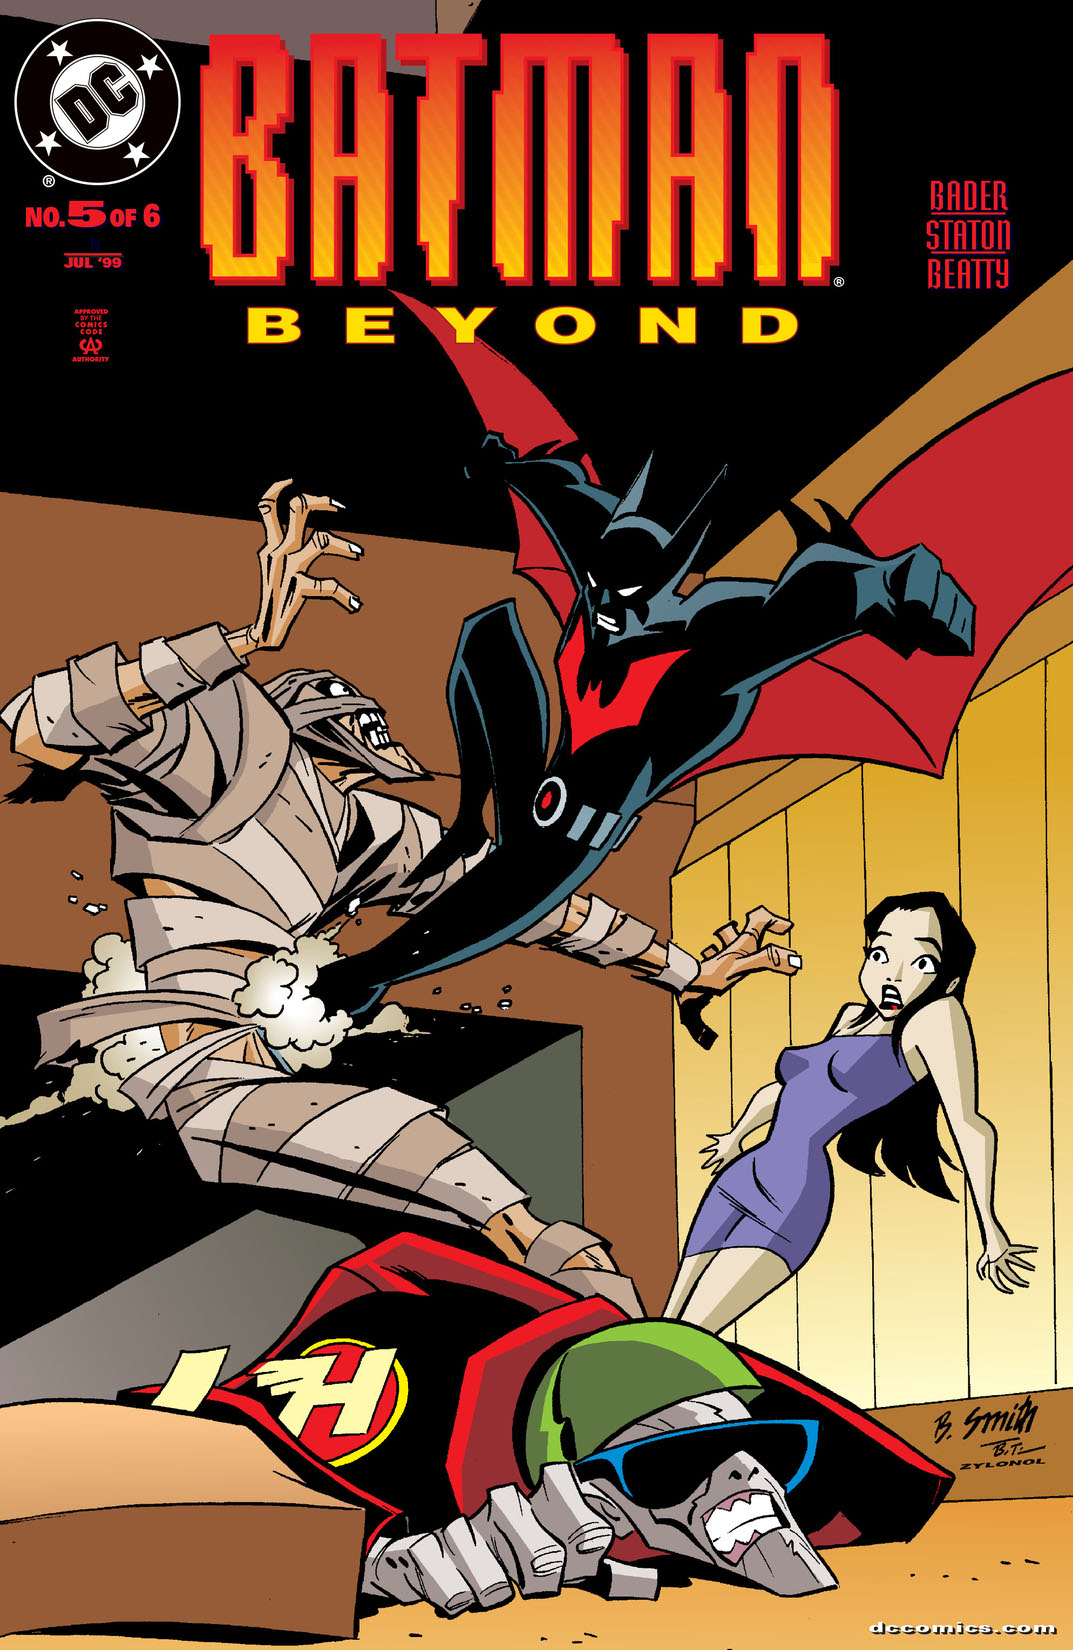 Batman Beyond #5 preview images